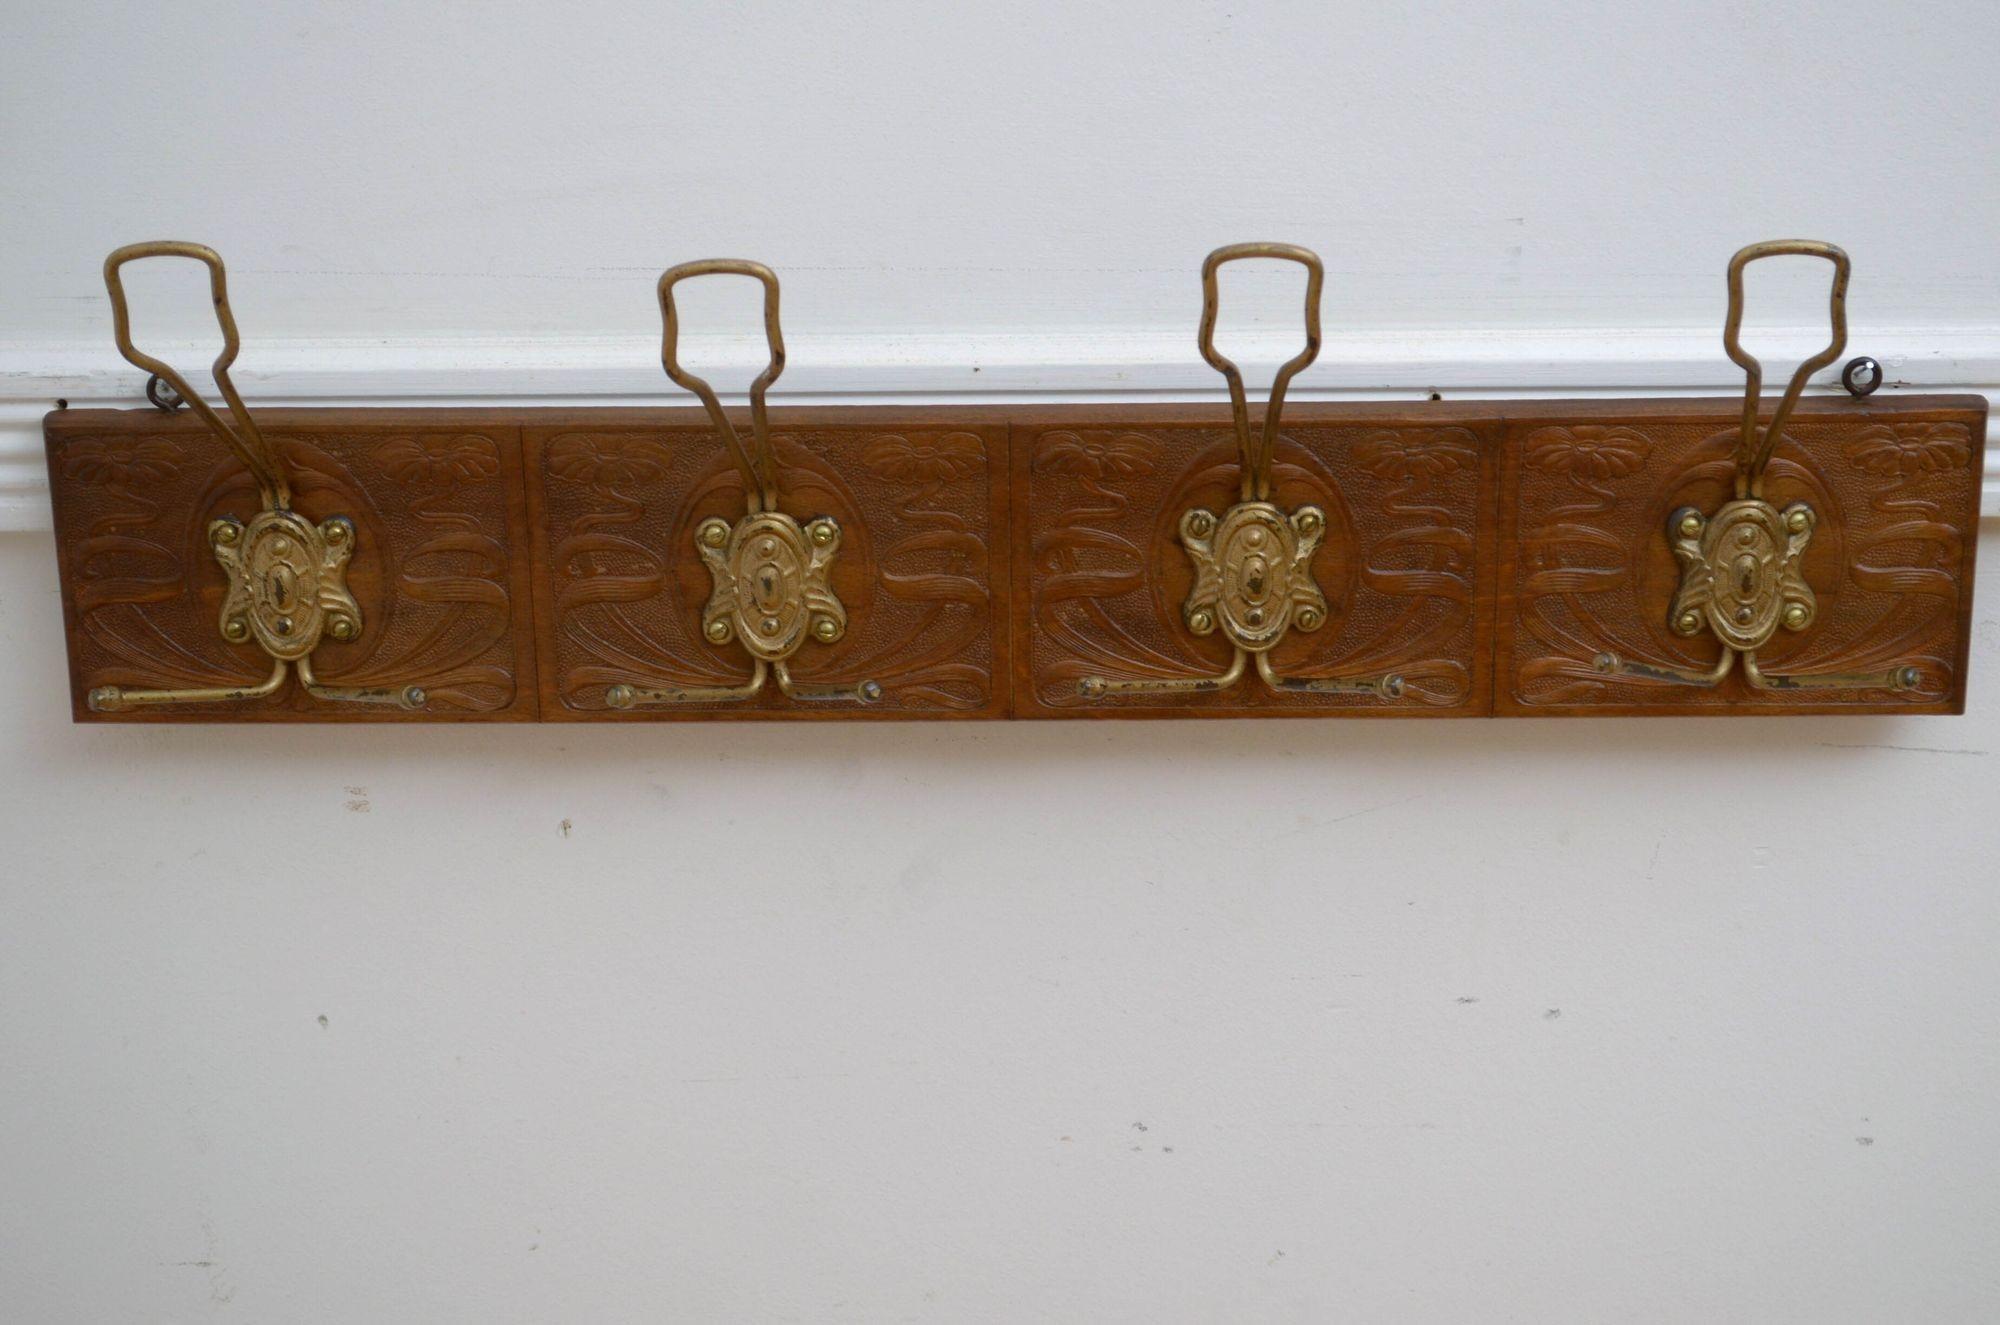 Art Nouveau Coat Hooks Coat Rack In Good Condition For Sale In Whaley Bridge, GB